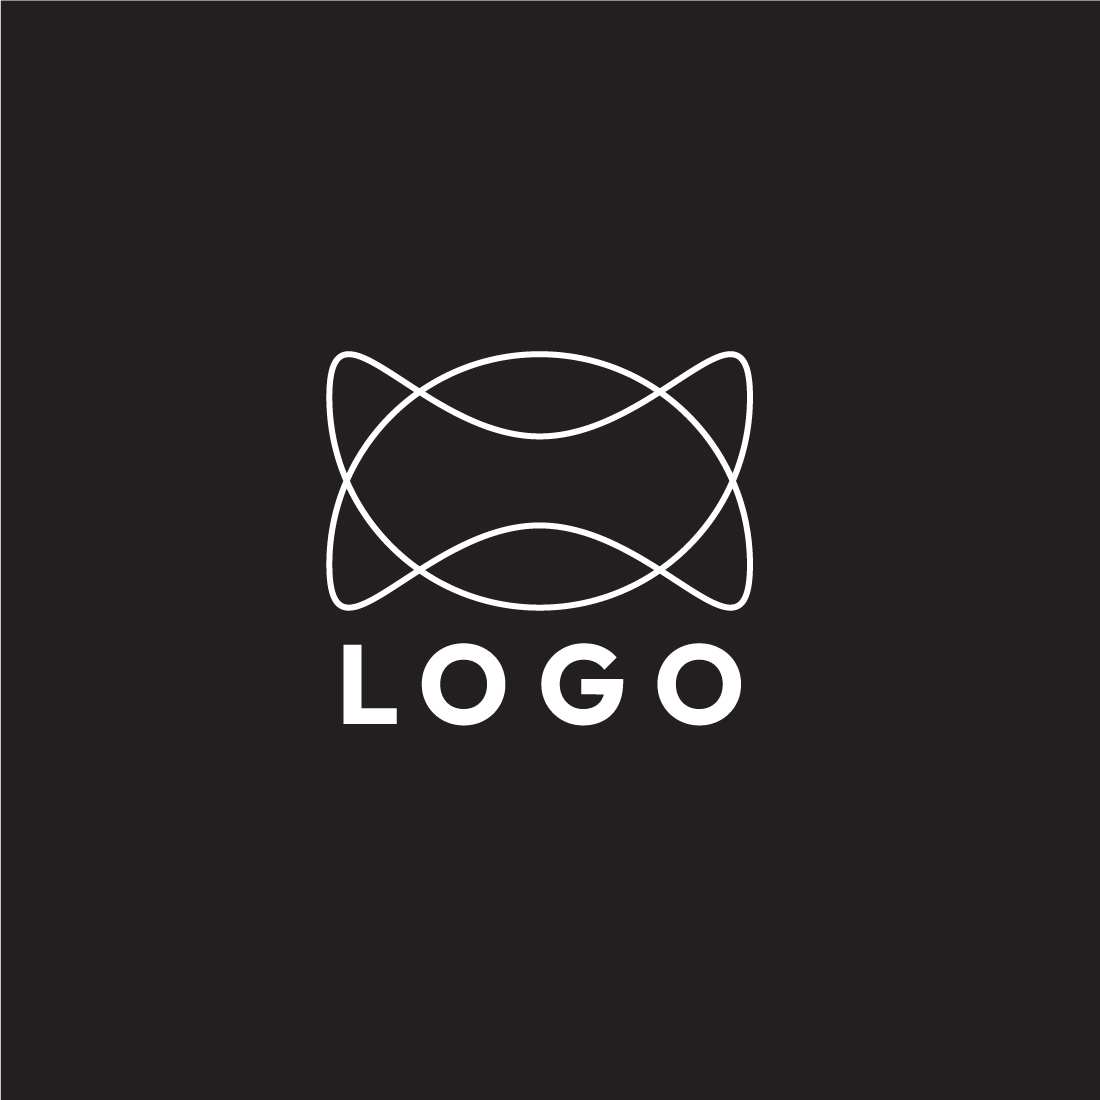 edgy logo designs